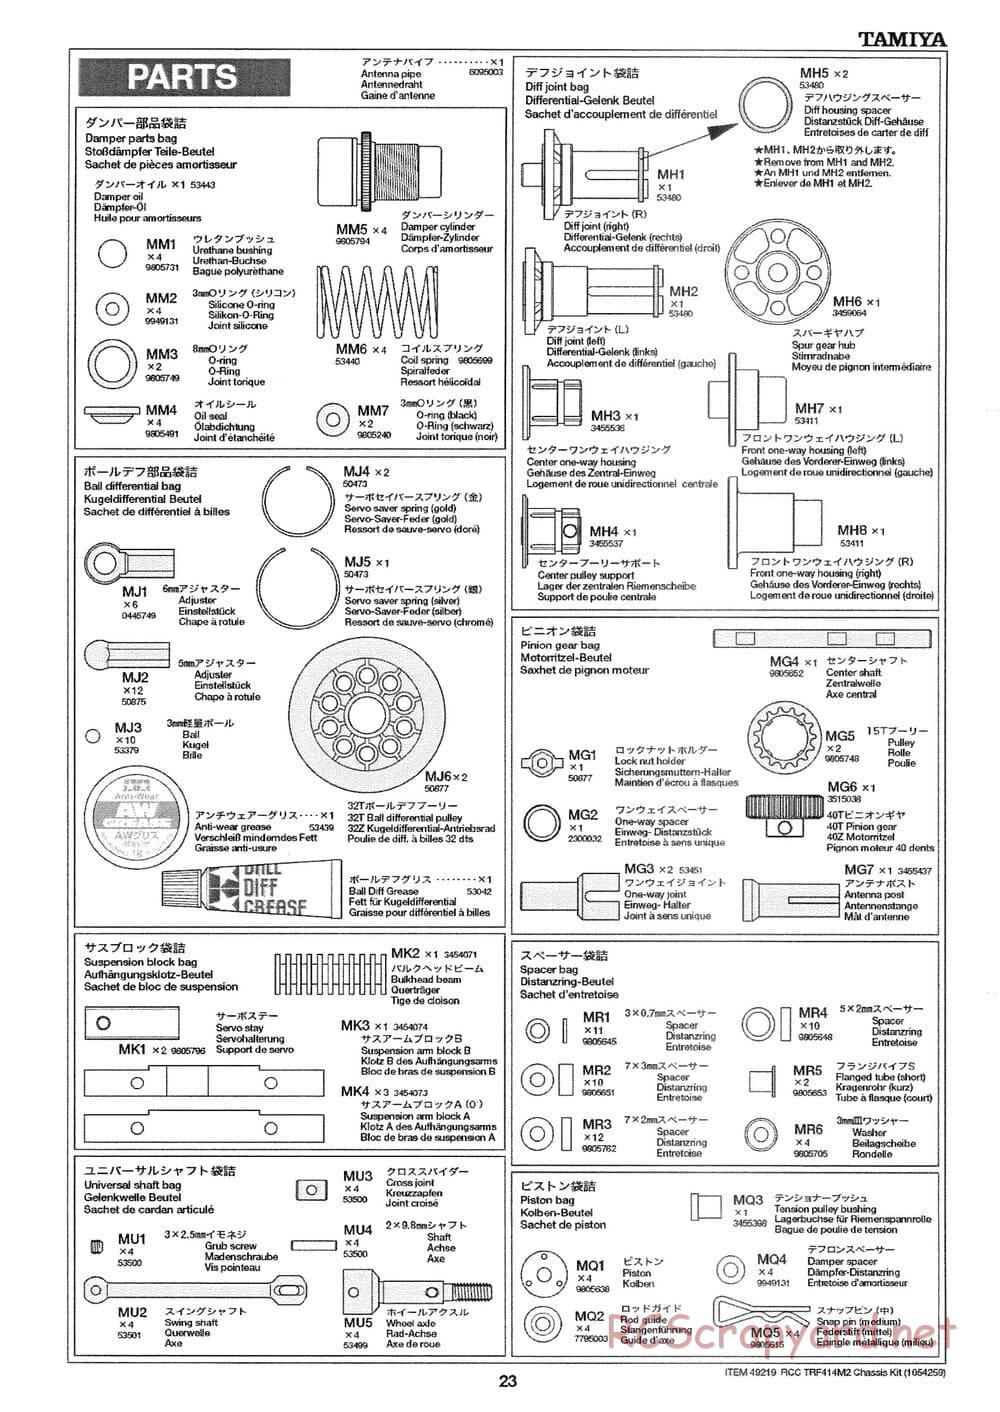 Tamiya - TRF414M II Chassis - Manual - Page 23